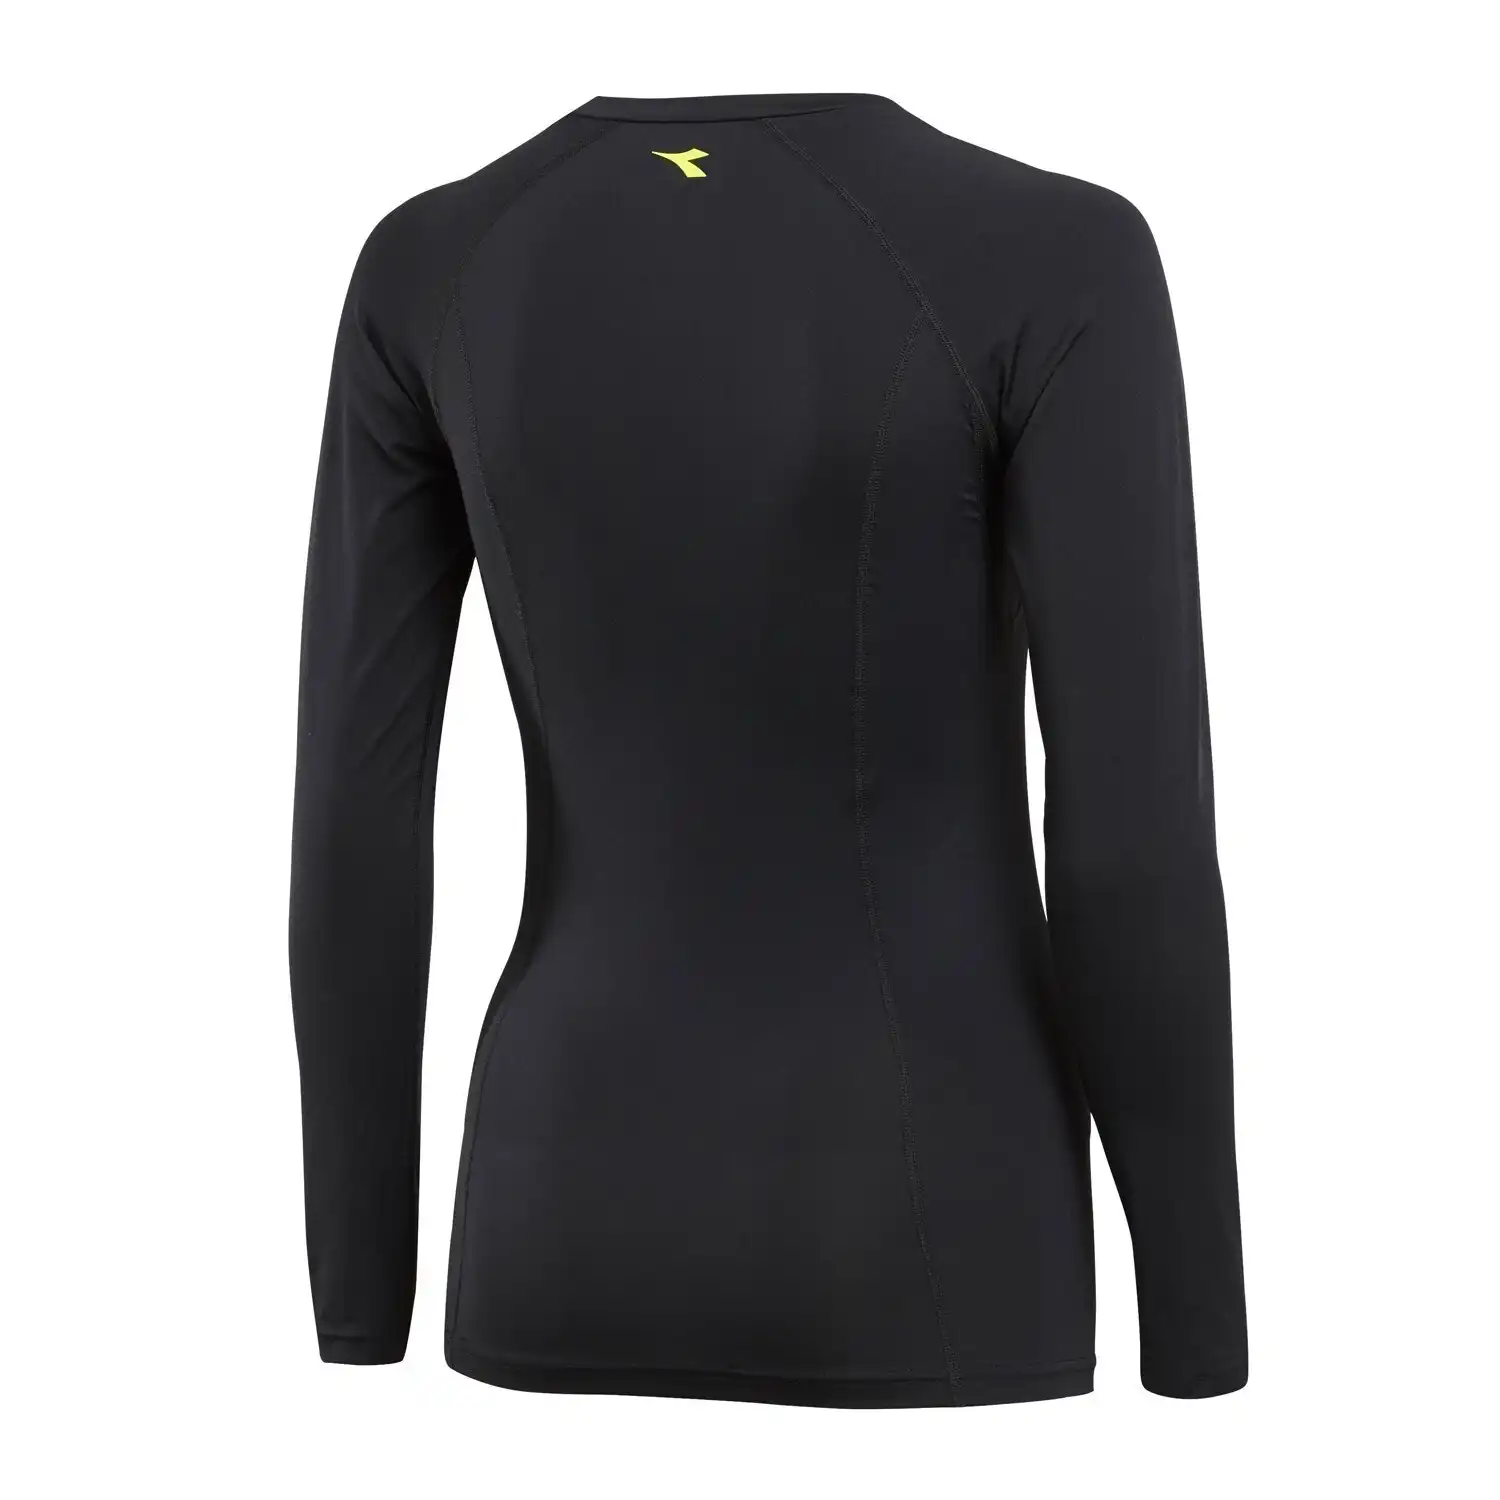 Diadora Ladies Compression Sports Thermal Long Sleeve Tee Top T Shirt - Black